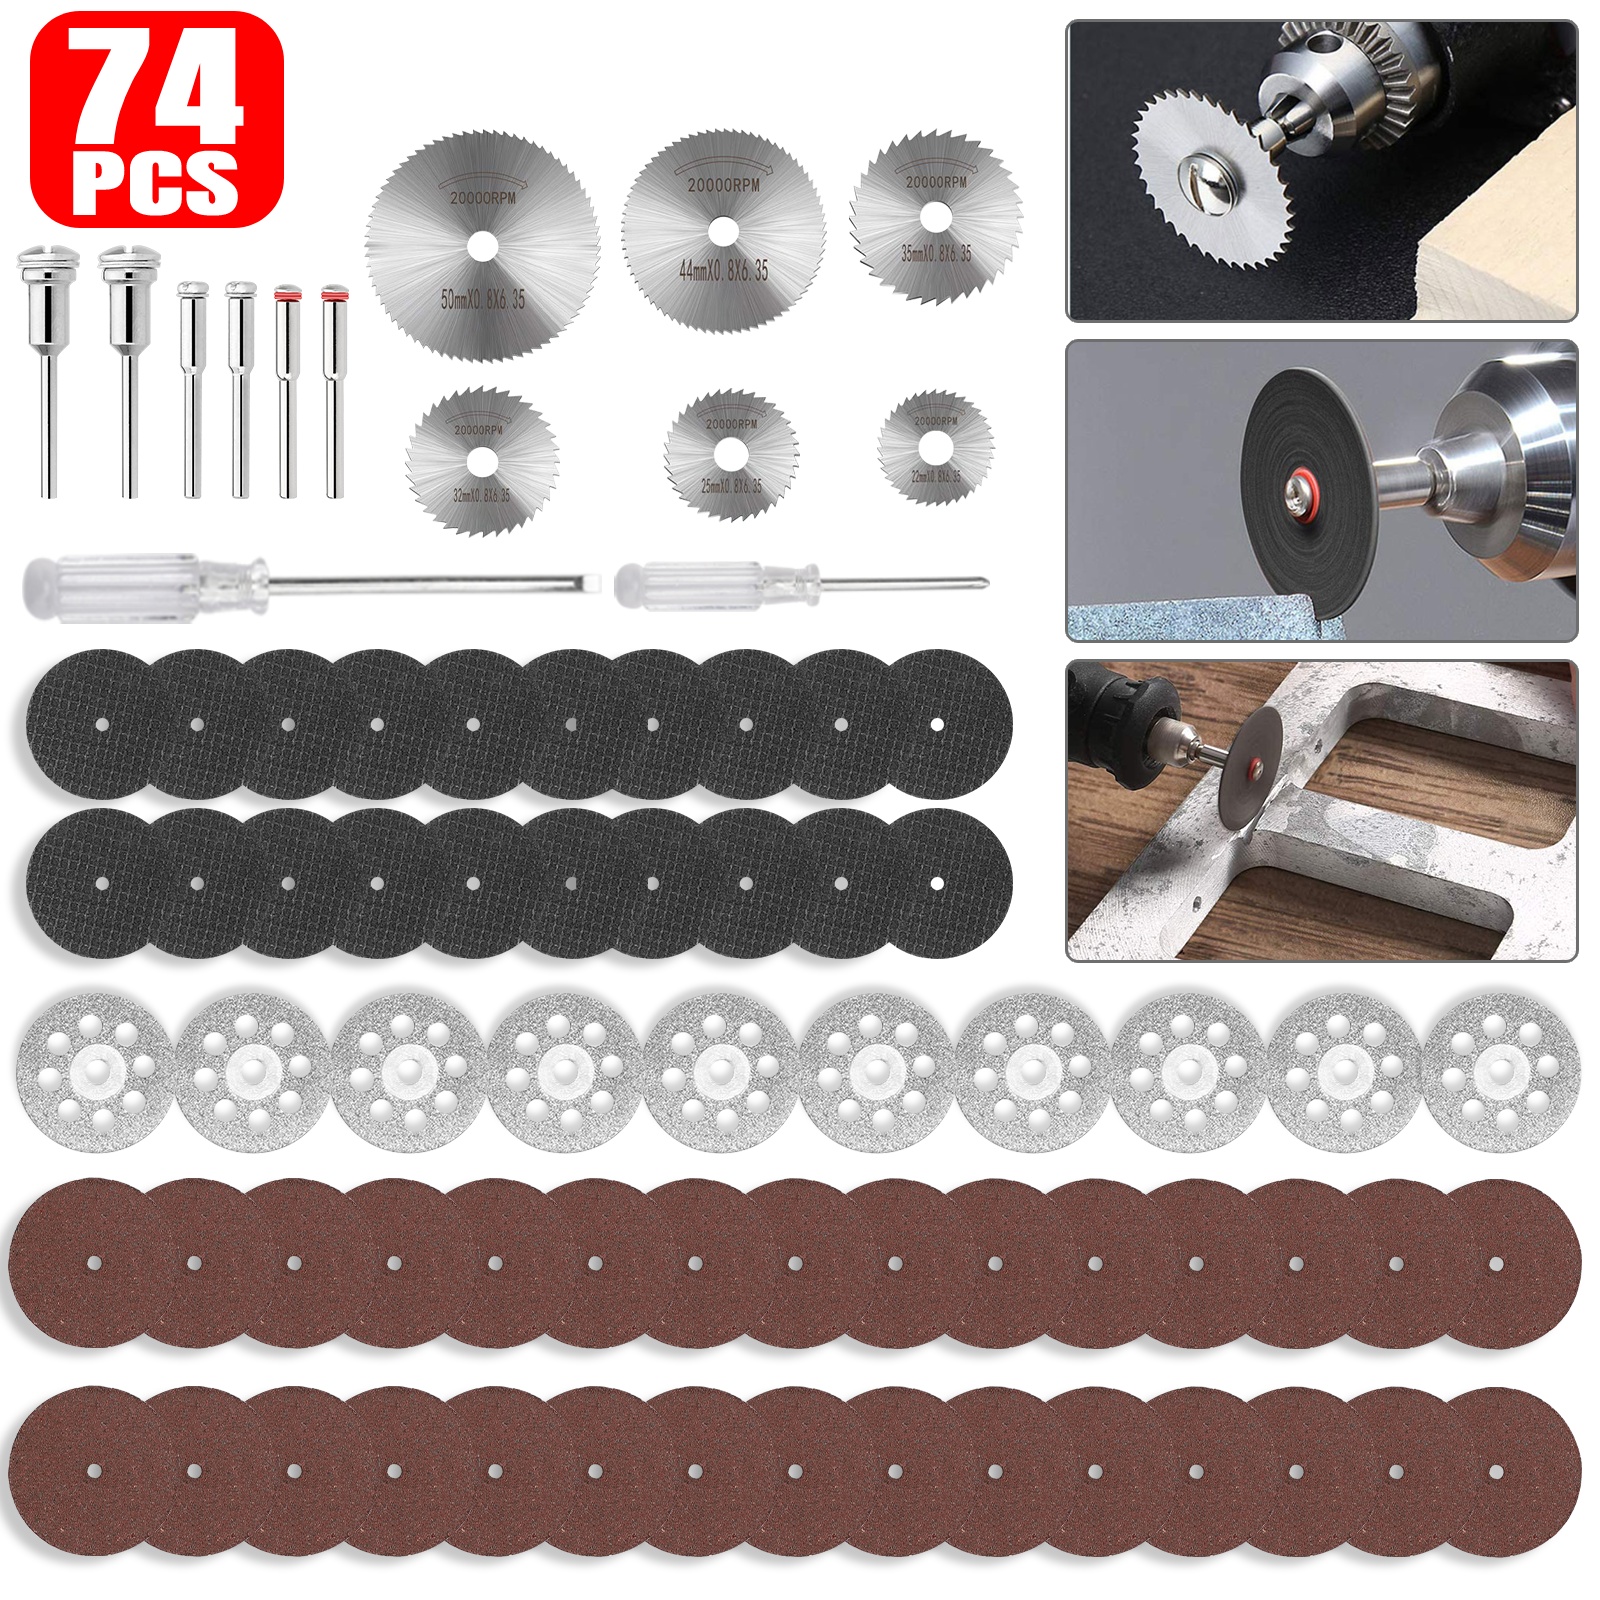 30 Diamond Cutting Wheels For Dremel Rotary Tool die grinder cutter cut off disc 